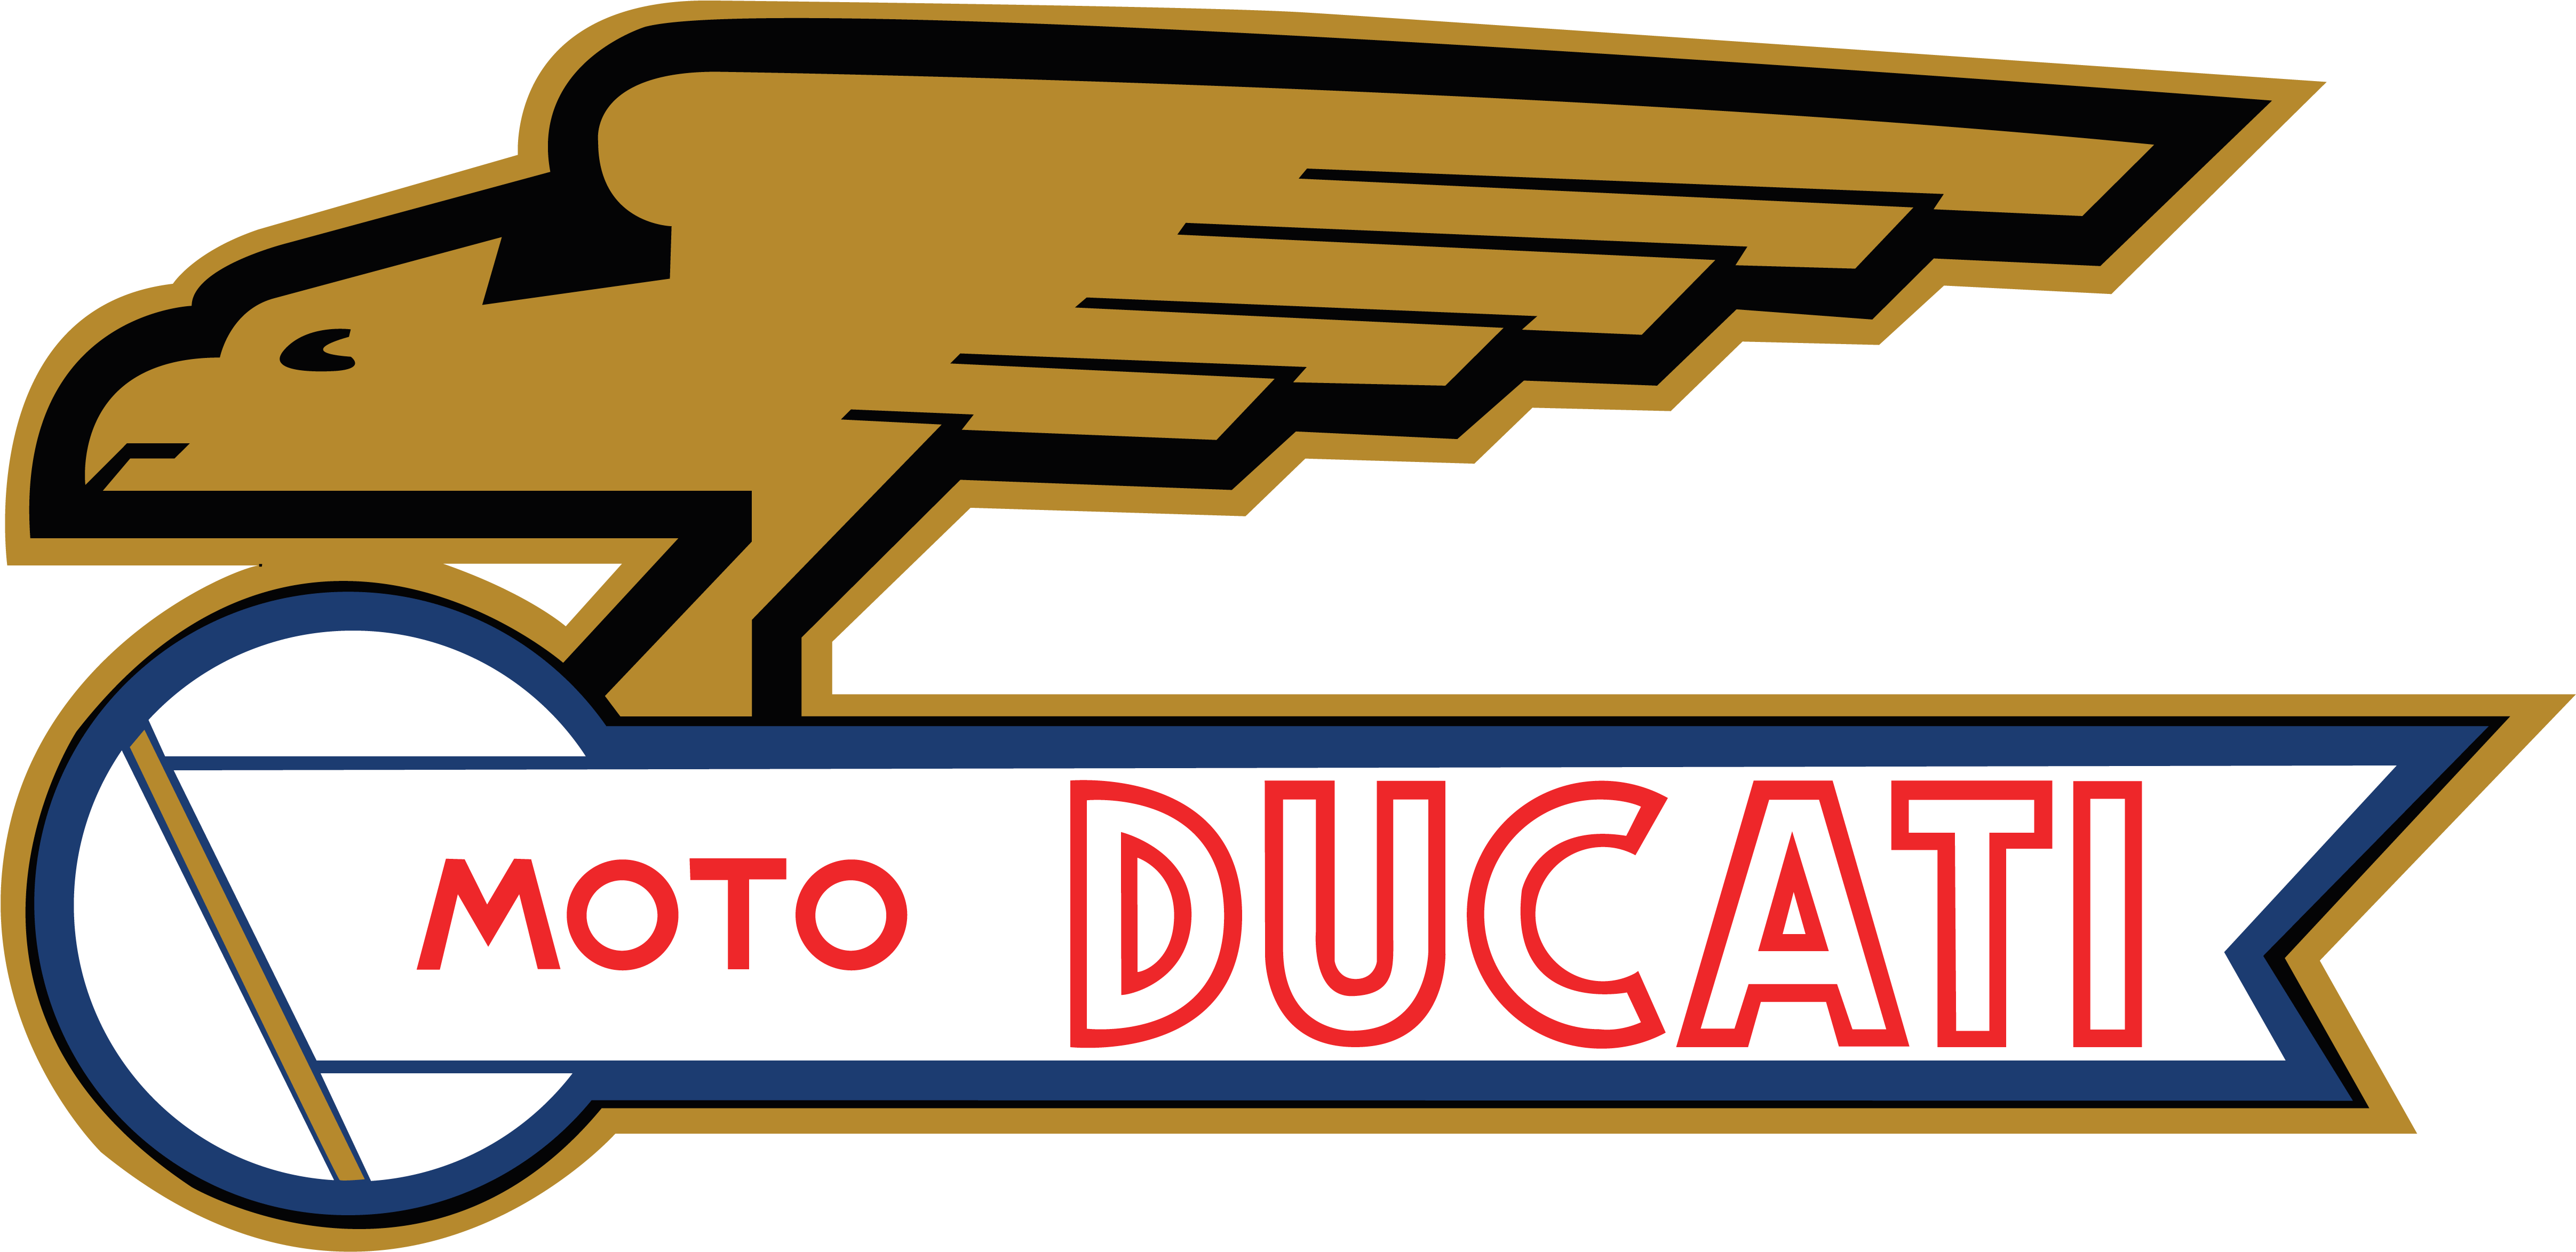 Moto Ducati Logo 1959 Moto Logo, Gear Logo, Cafe Racer - Moto Ducati Logo (5000x3628)